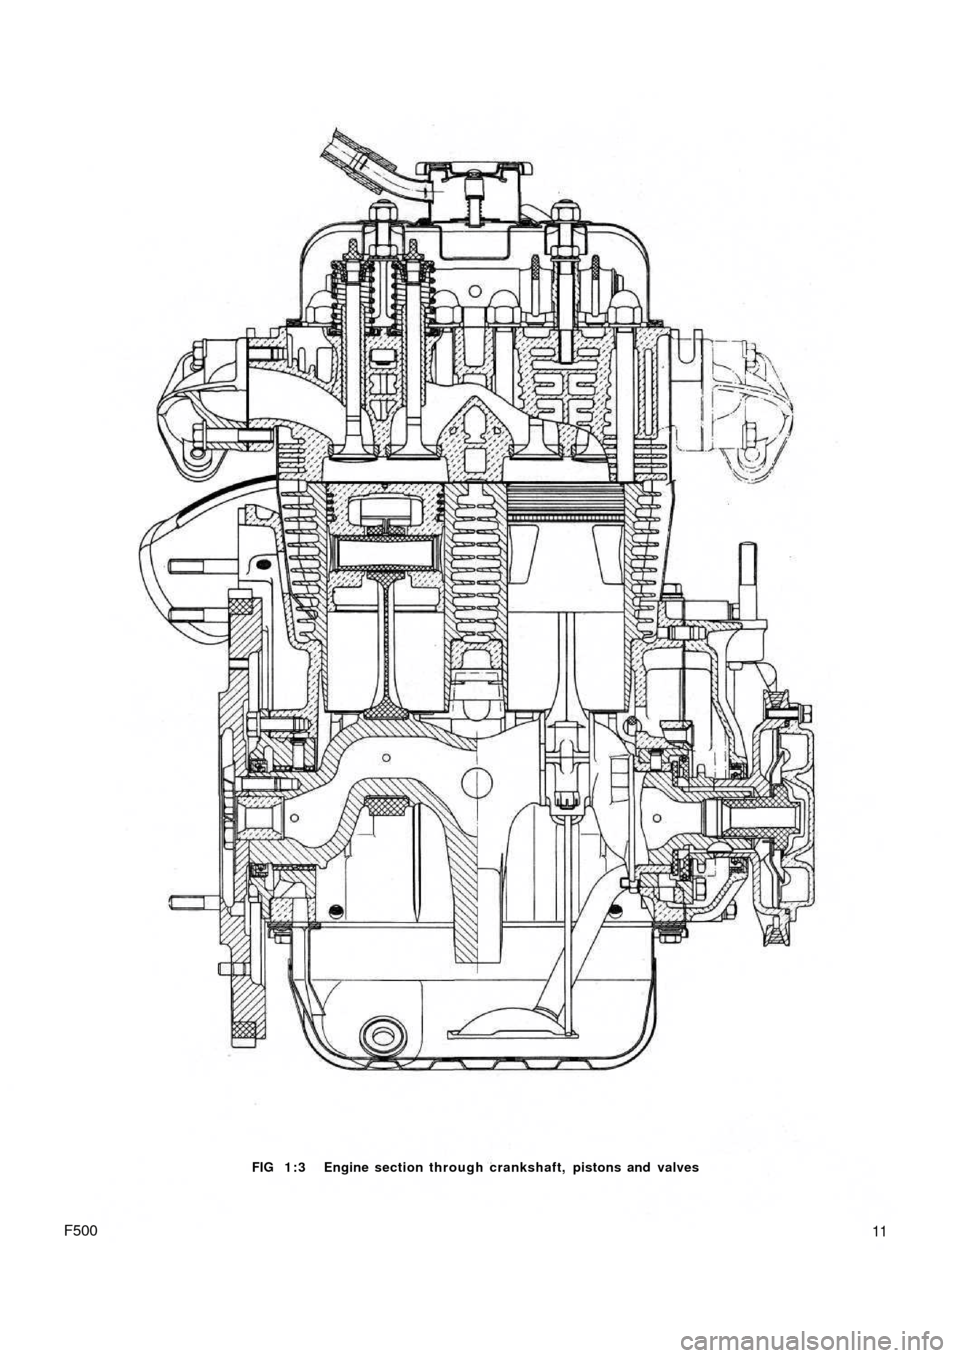 FIAT 500 1966 1.G Workshop Manual FIG 1 : 3  Engine section through crankshaft, pistons and  valves
F50011 